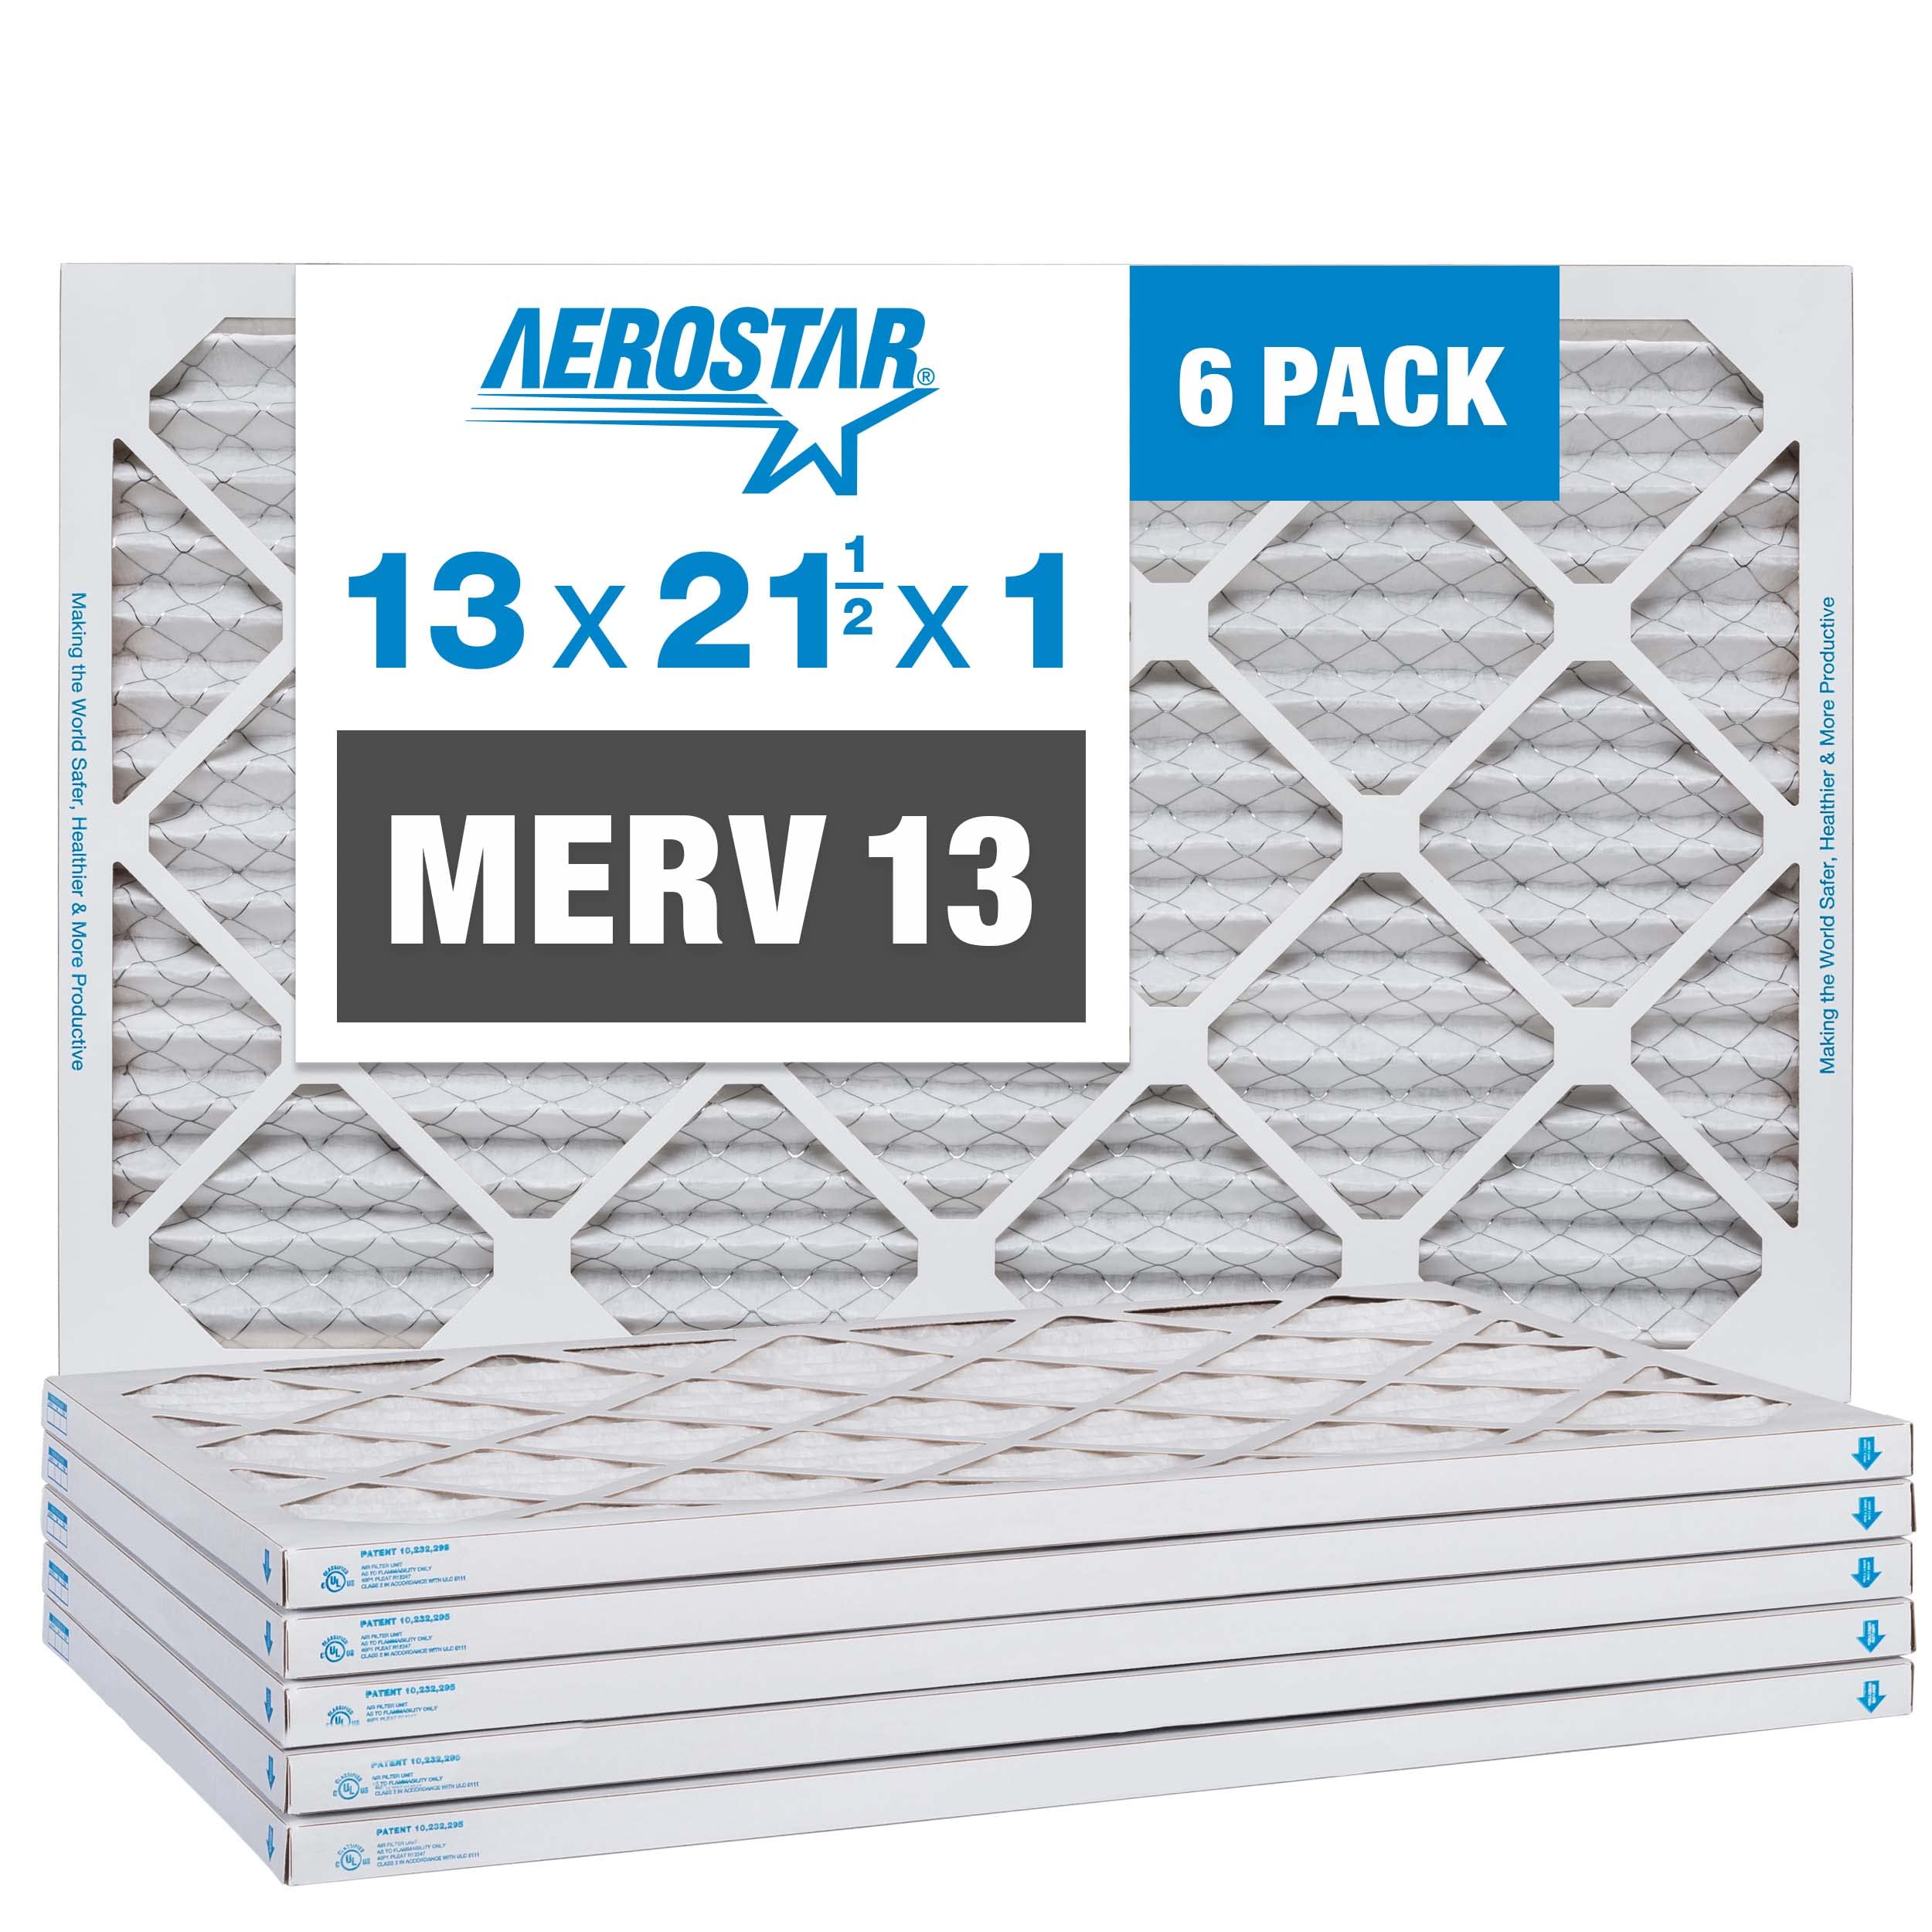 Aerostar 13x21 1/2x1 MERV 13 Pleated Air Filter, AC Furnace Air Filter, 6 Pack (Actual Size: 12 7/8" x 21 1/2" x 3/4")